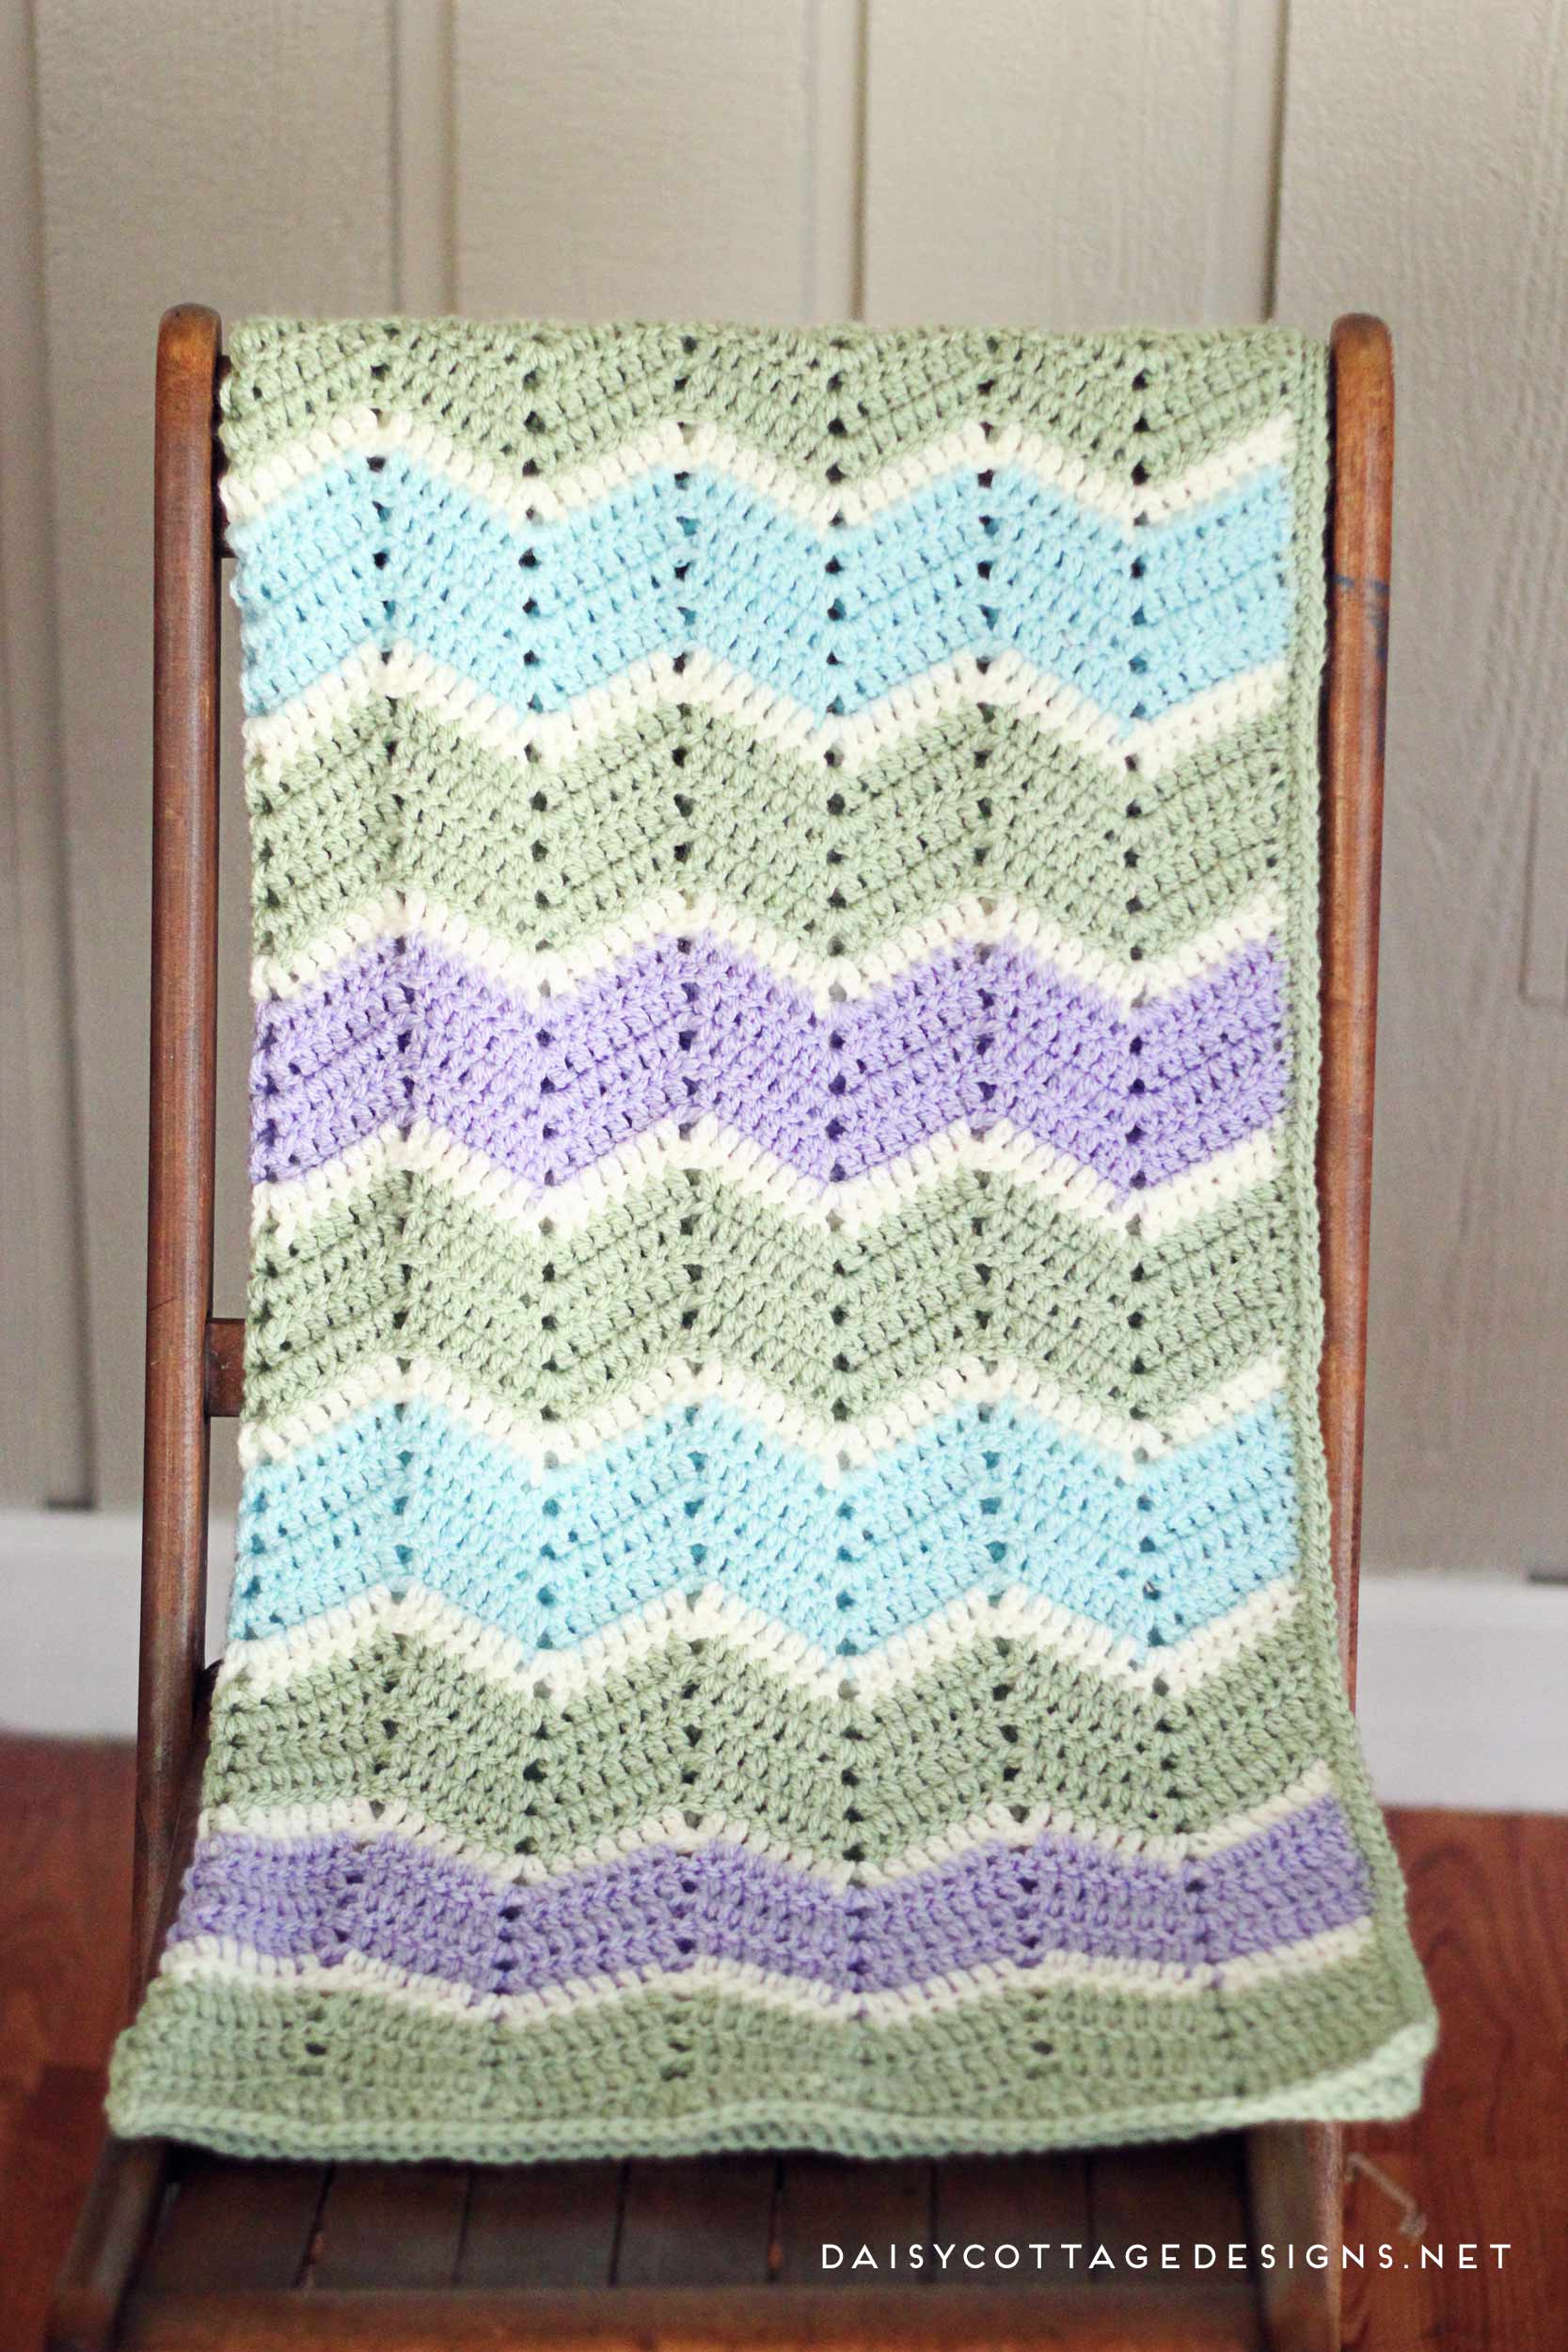 Crochet Chevron Baby Blanket Free Pattern Easy Chevron Blanket Crochet Pattern Daisy Cottage Designs